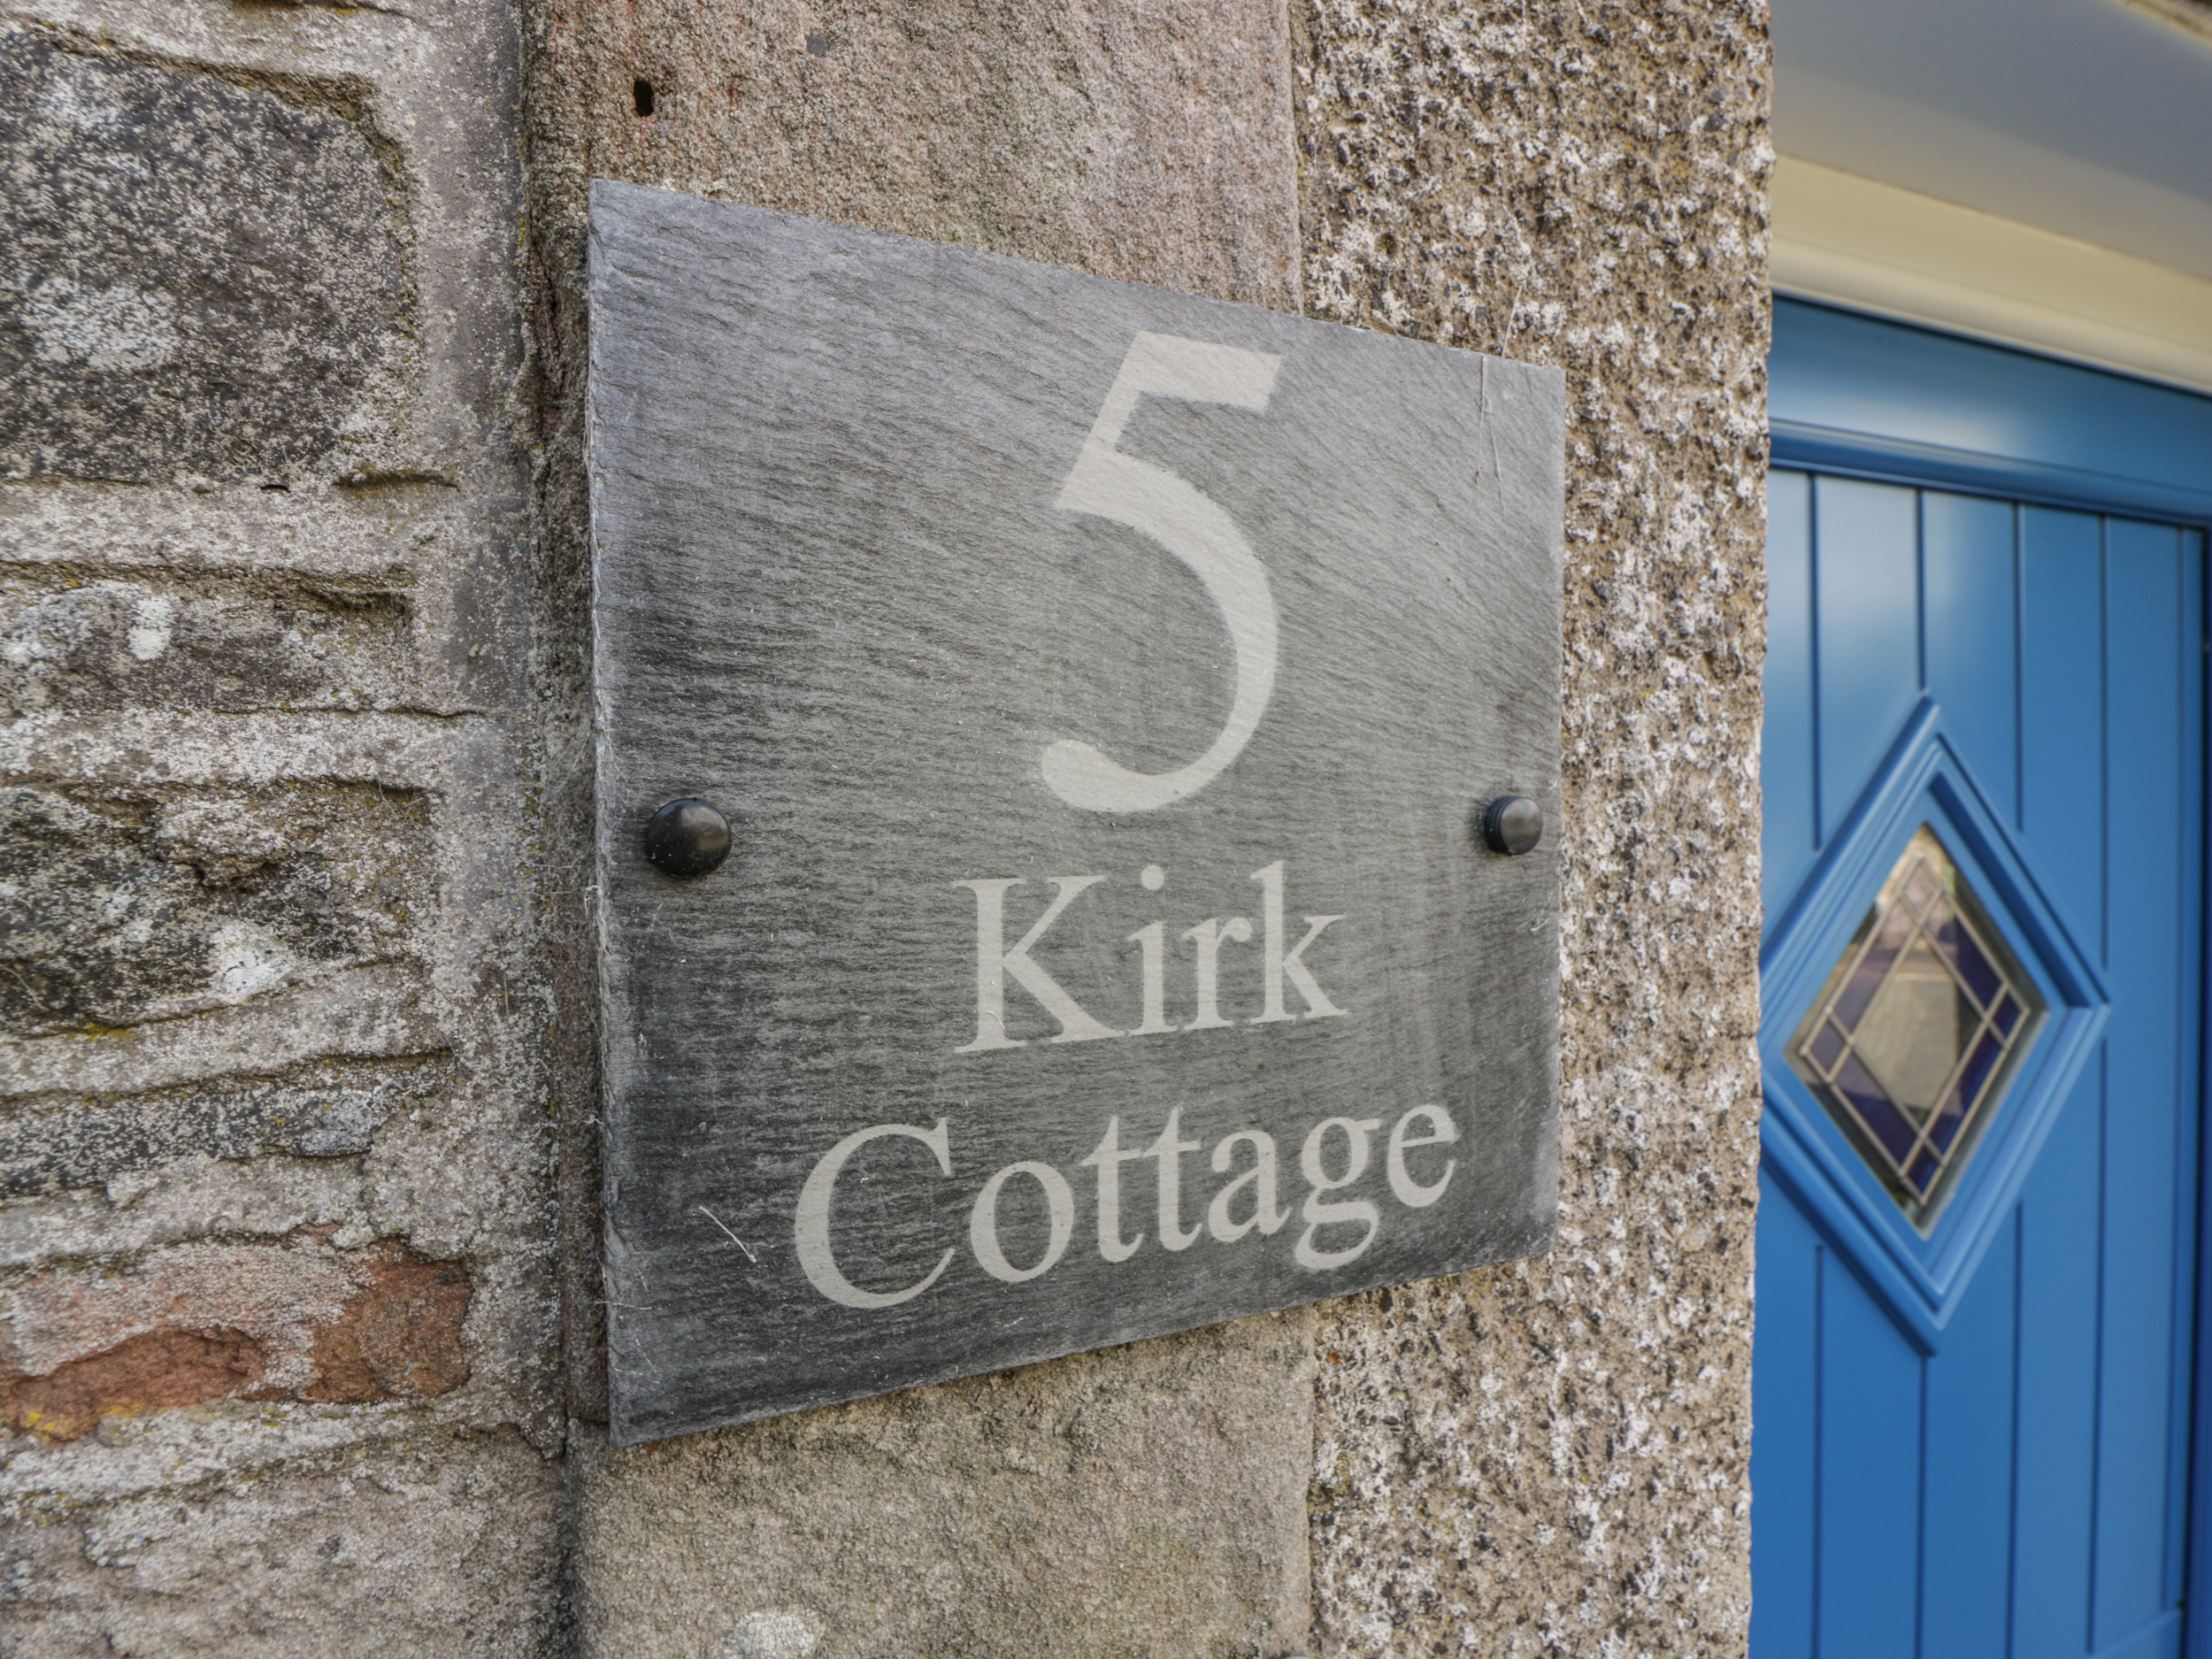 Kirk Cottage, Scotland